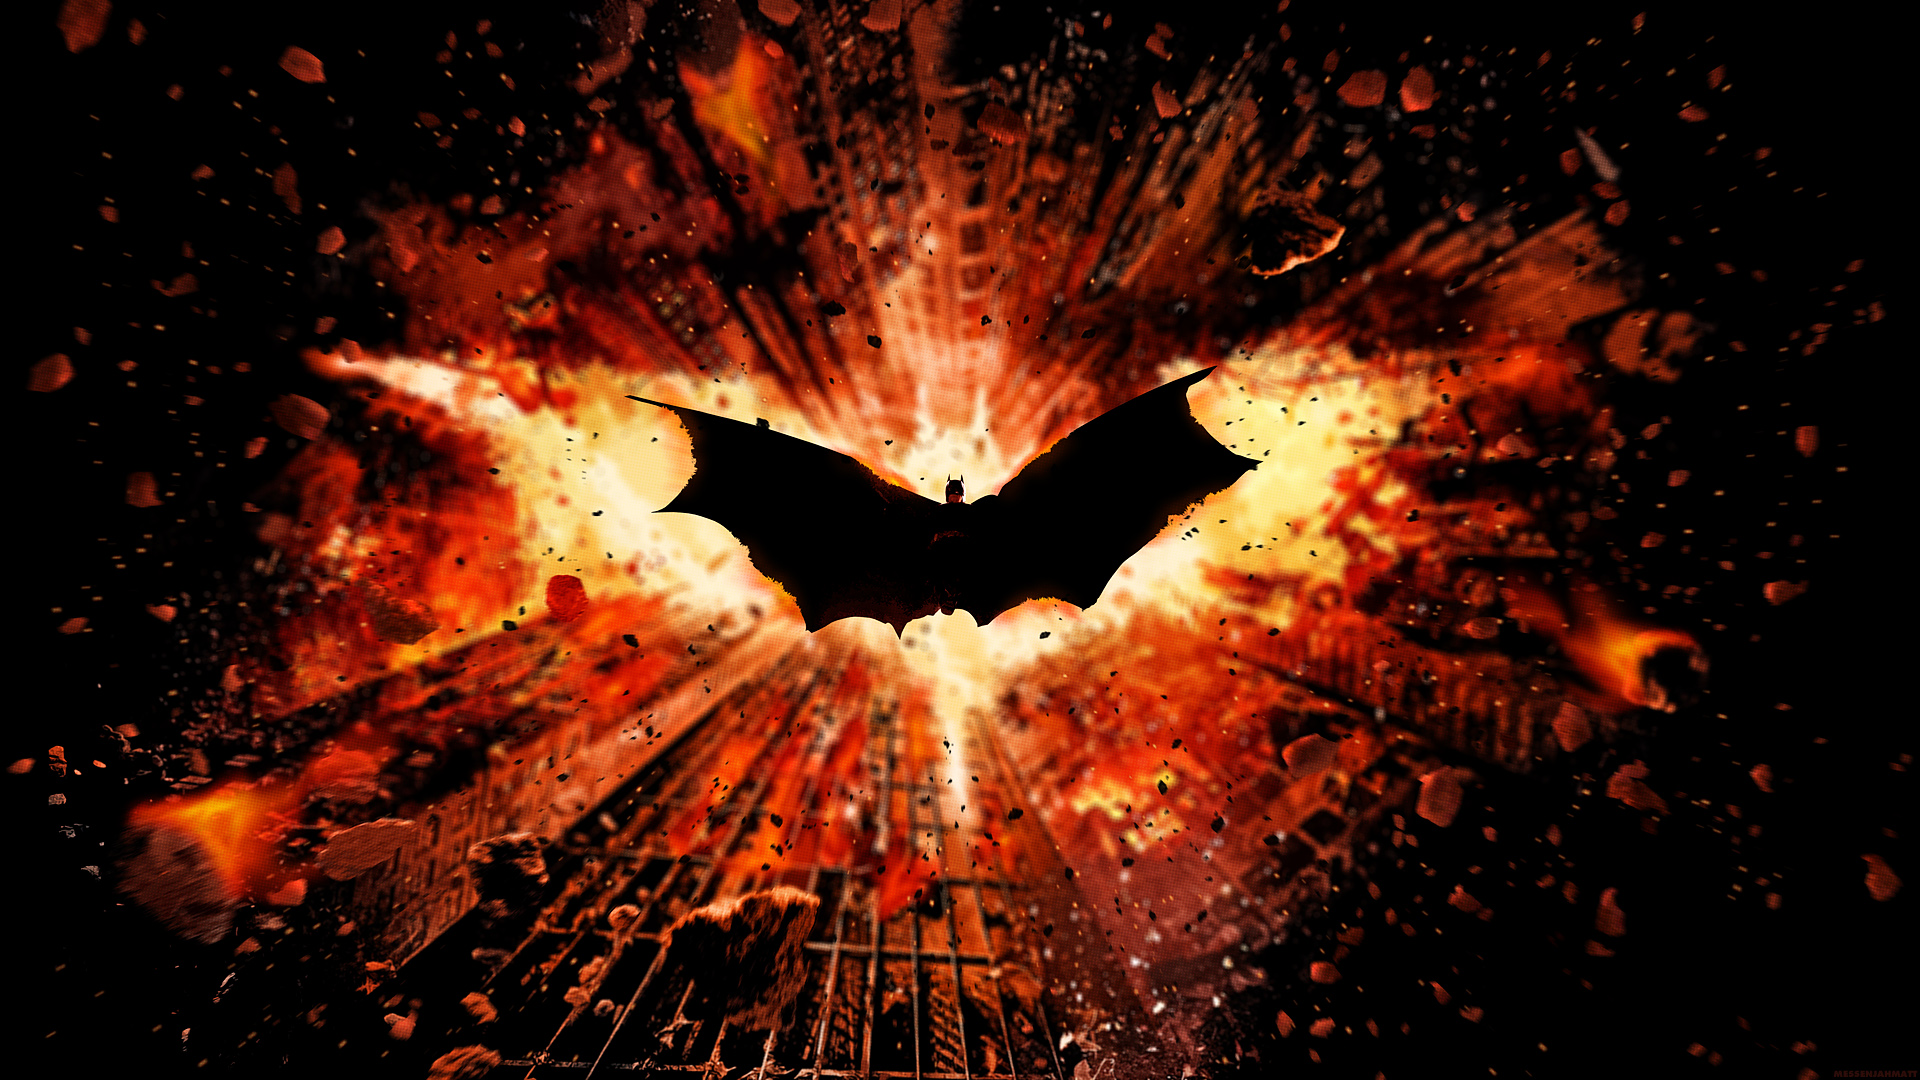 Dark Knight Bat Symbol In Flames